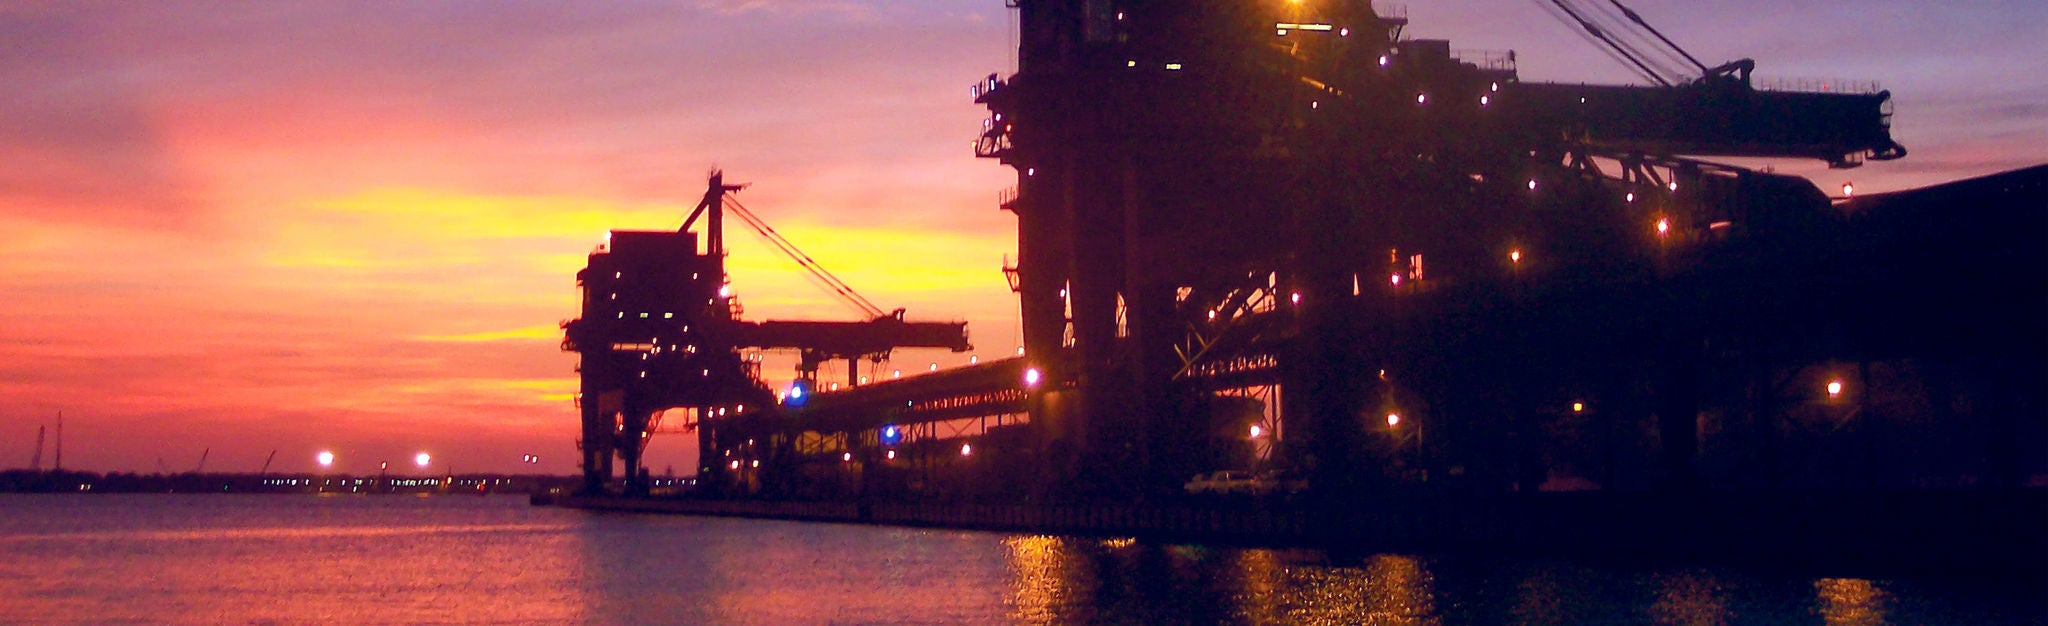 Sunset at Lamberts Point Coal Docks